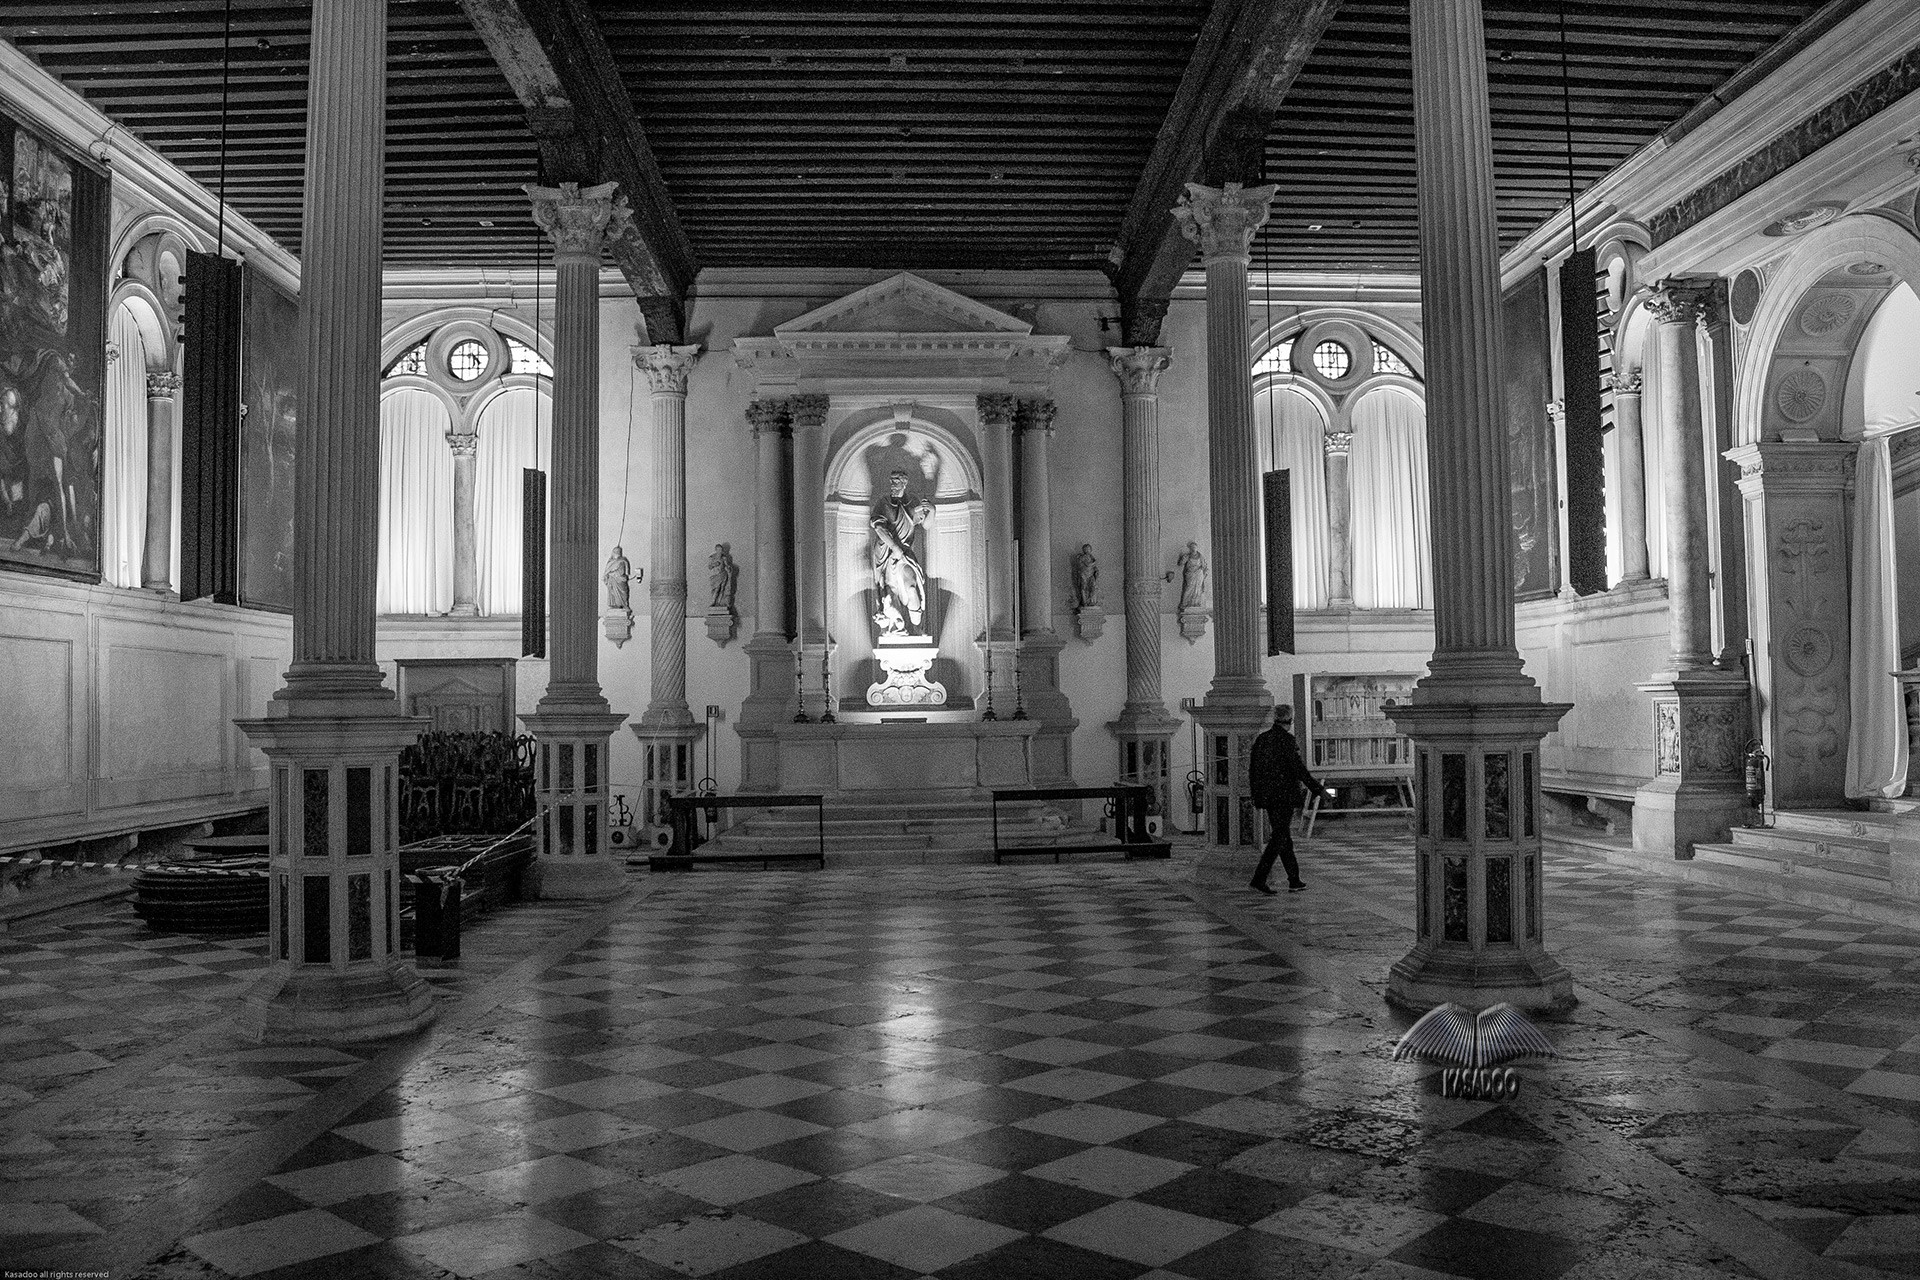 The Lower Floor in Great School of San Rocco in Venice-Italy - KASADOO